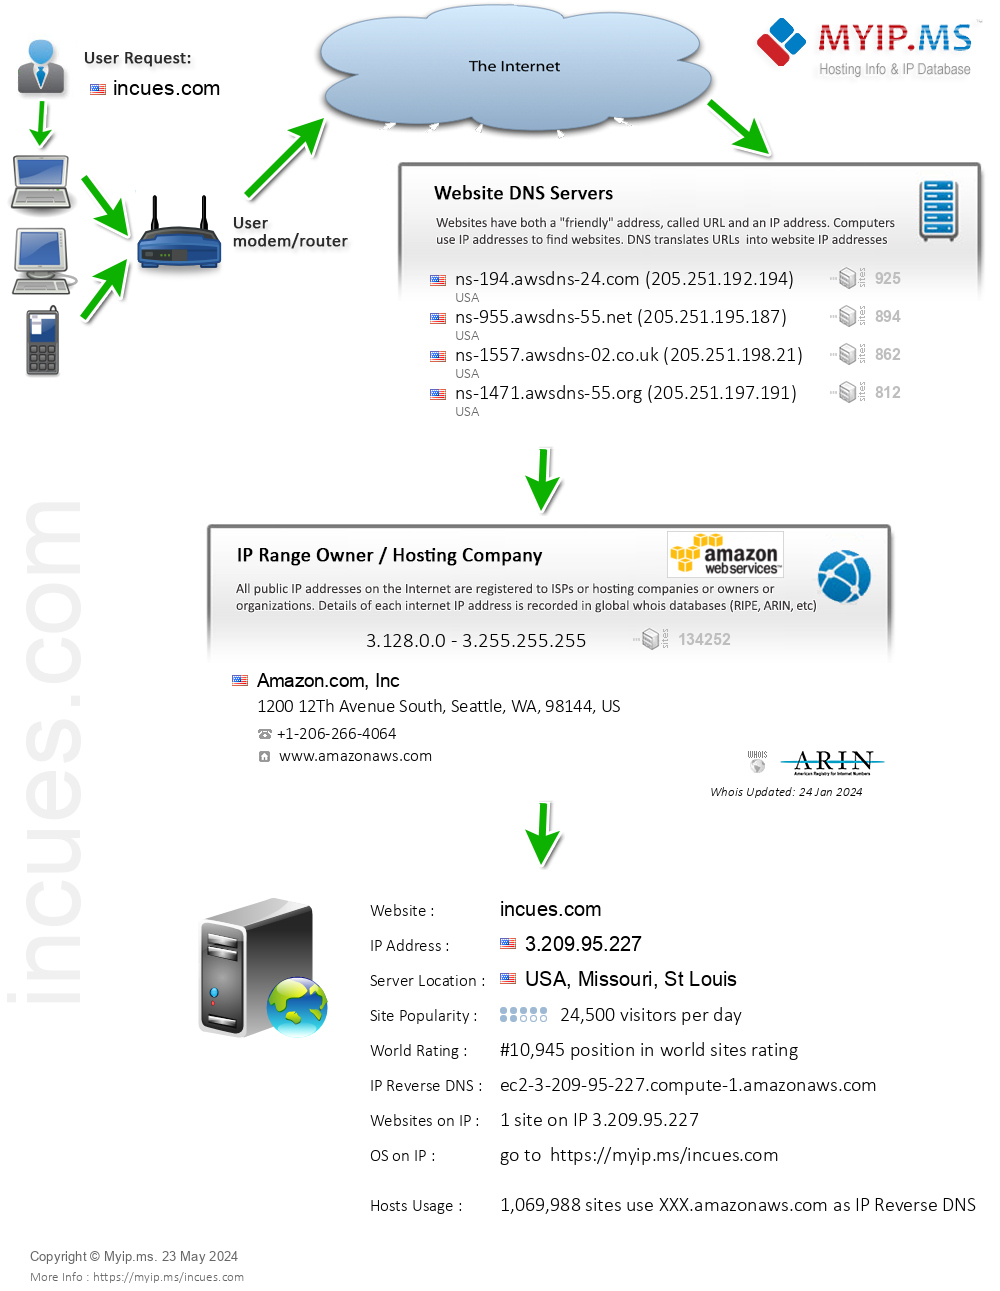 Incues.com - Website Hosting Visual IP Diagram